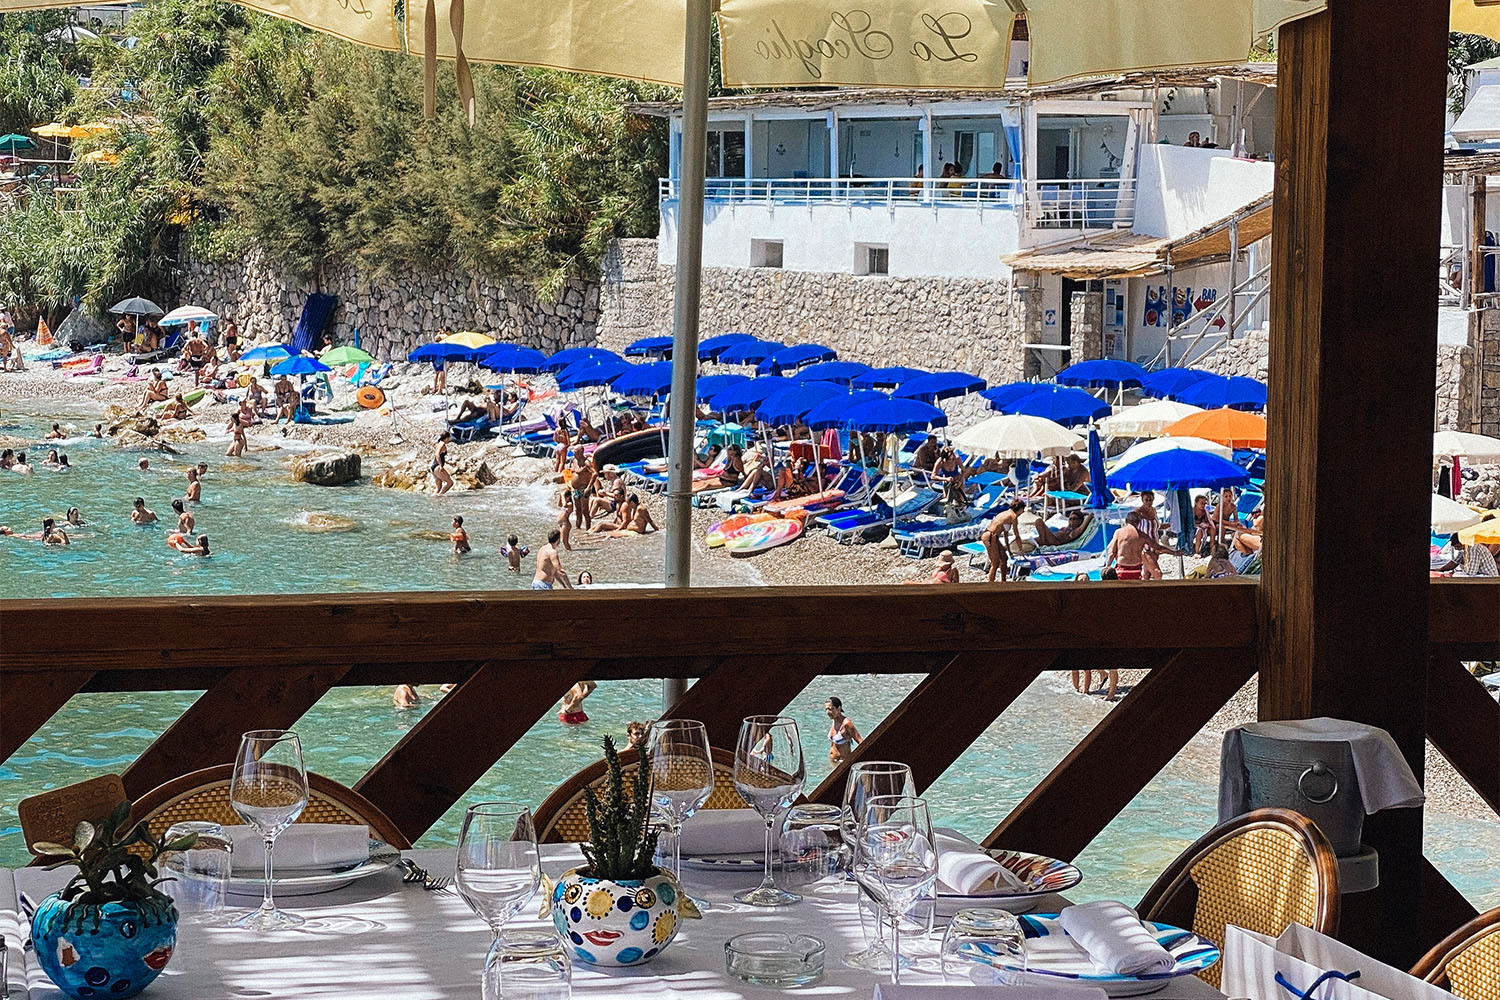 The "dining room" at Lo Scoglio on the Amalfi Coast.